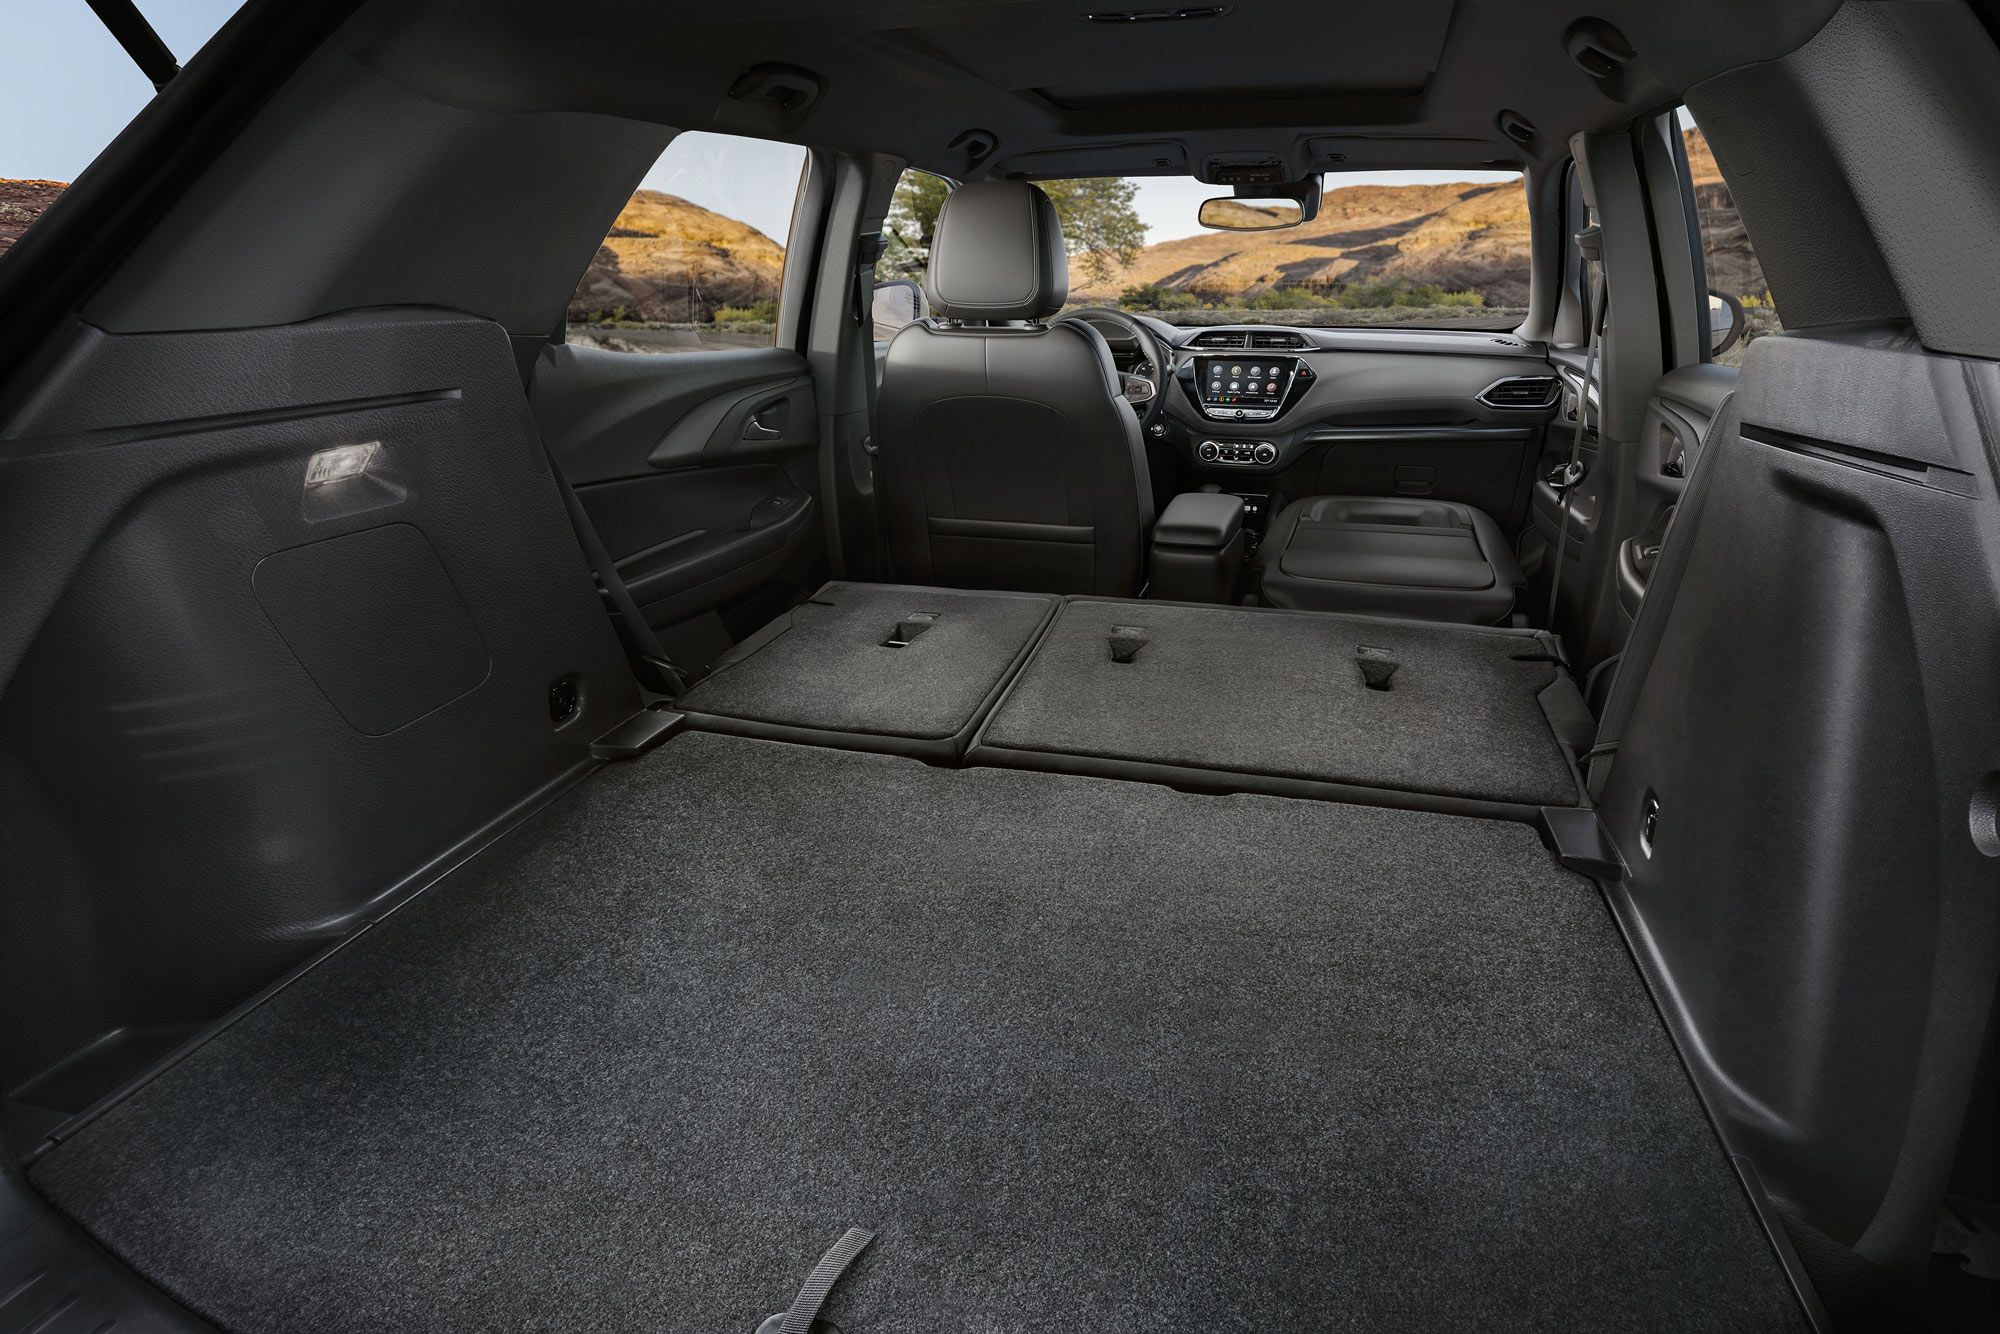 2023 Chevrolet Trailblazer cargo area with seats down